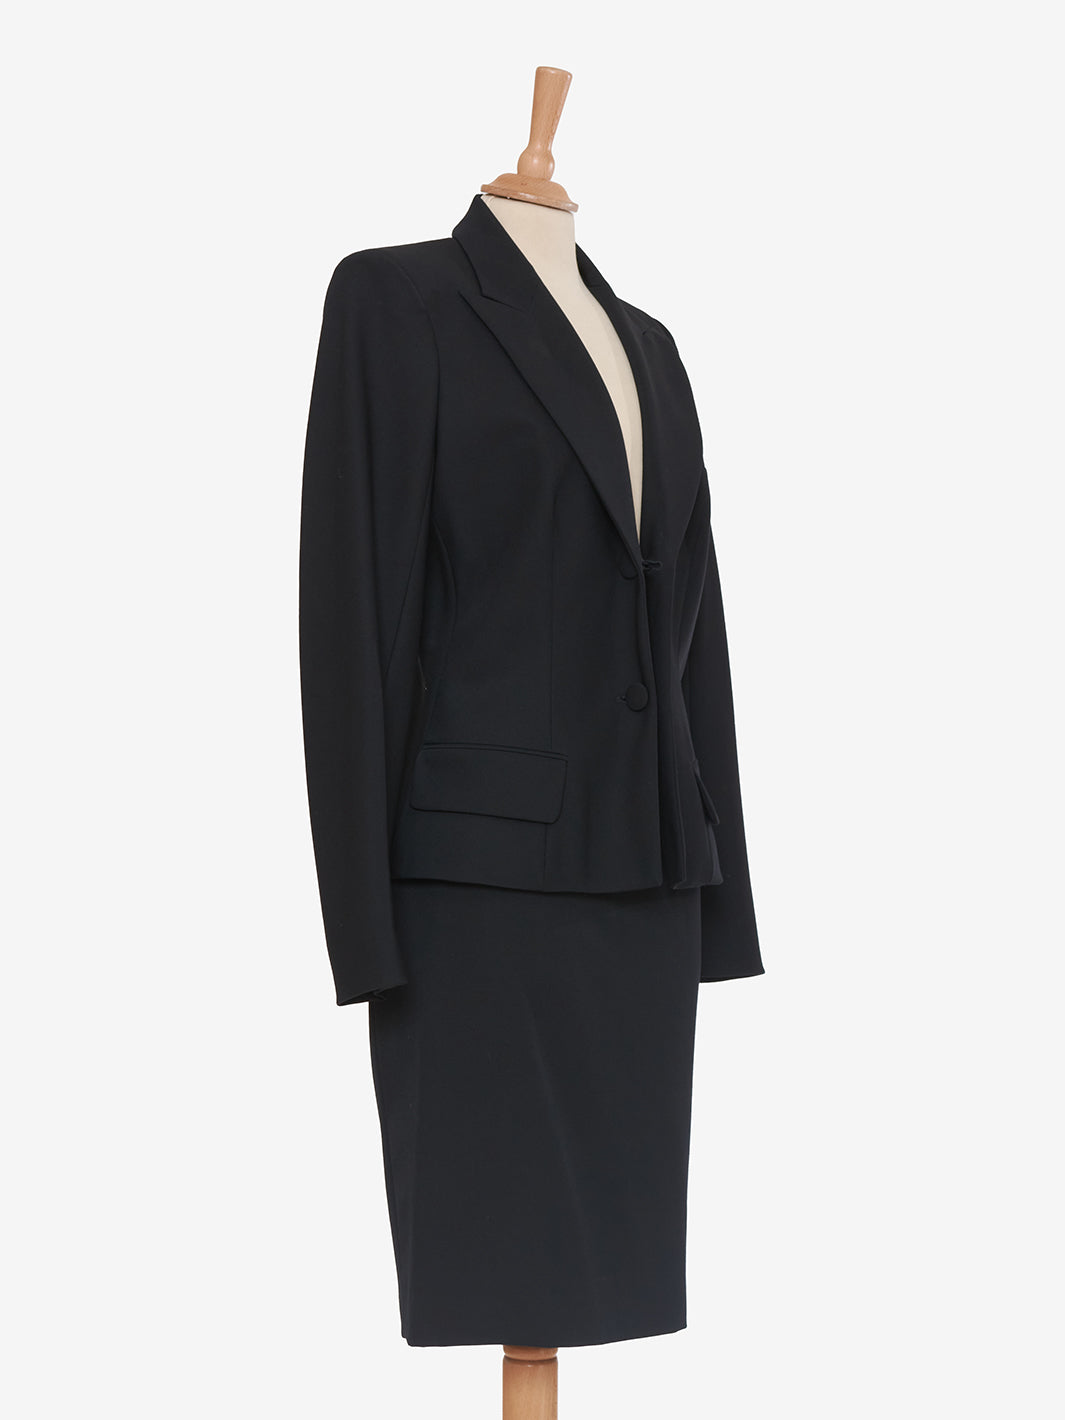 Yves Saint Laurent Complete Tom Ford Vintage Suit